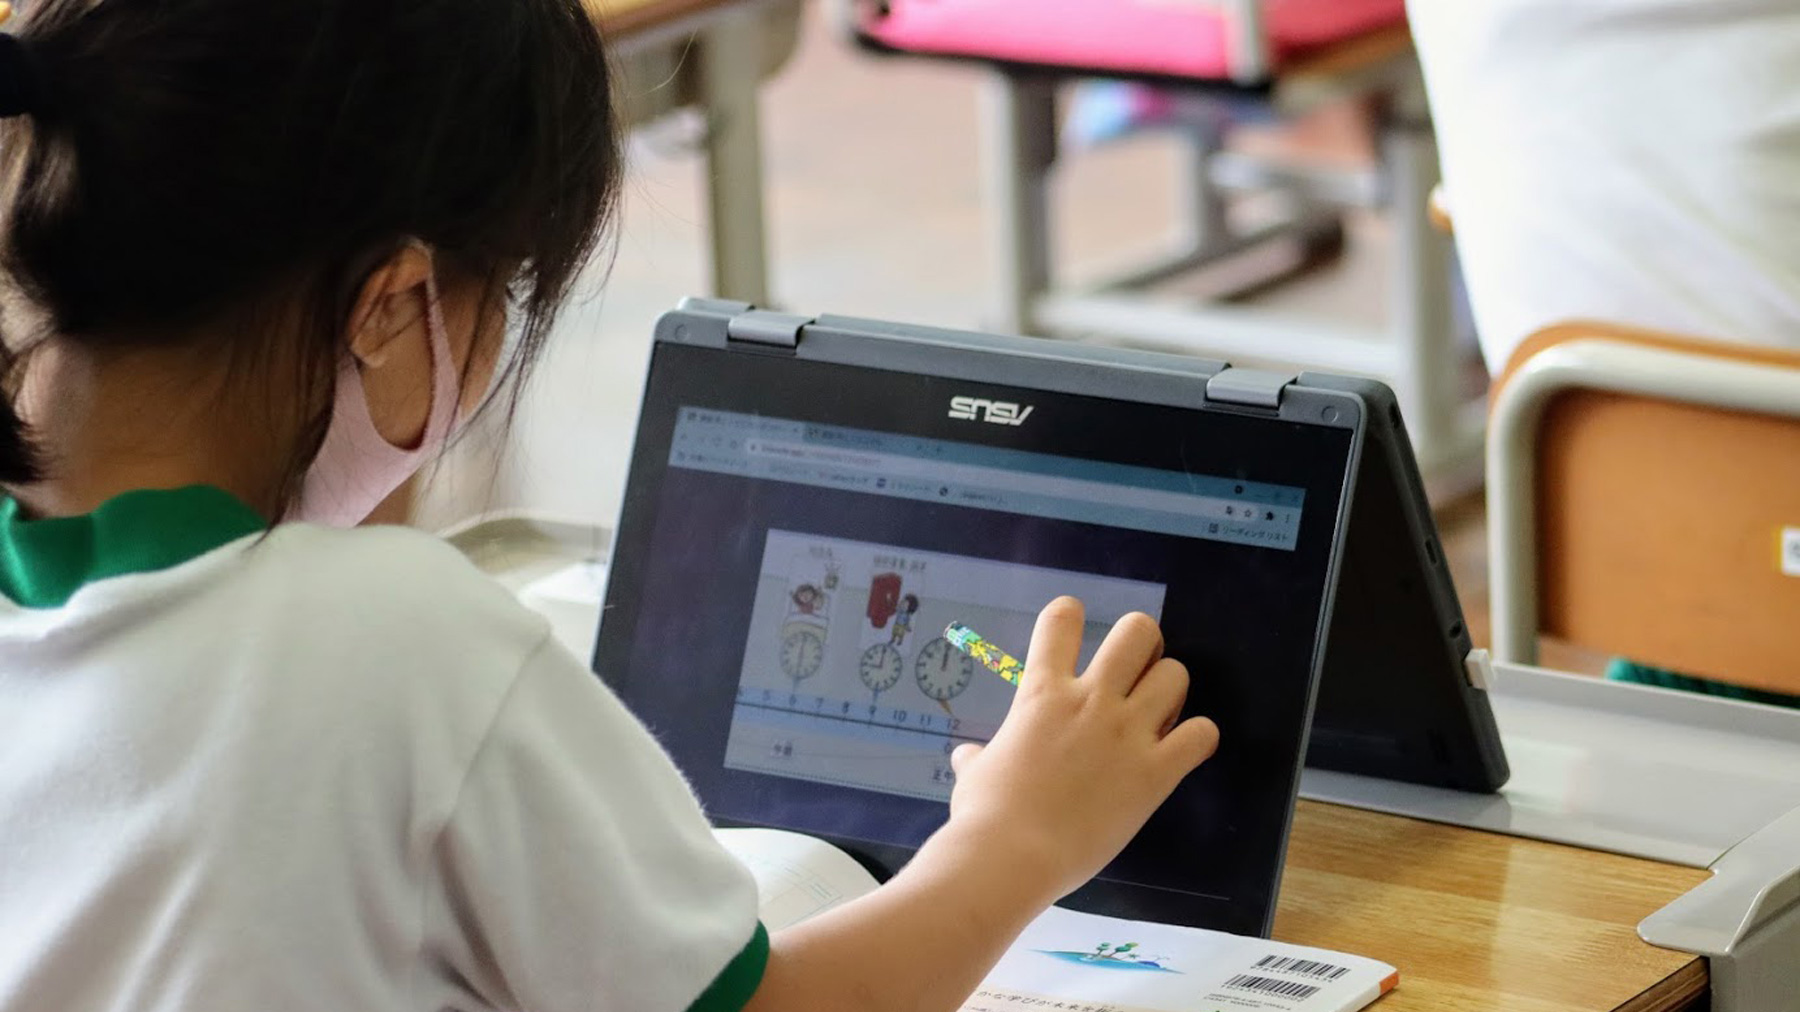 GIGAスクール構想で Chromebook™、クラウド環境活かす挑戦を／印西市教育委員会